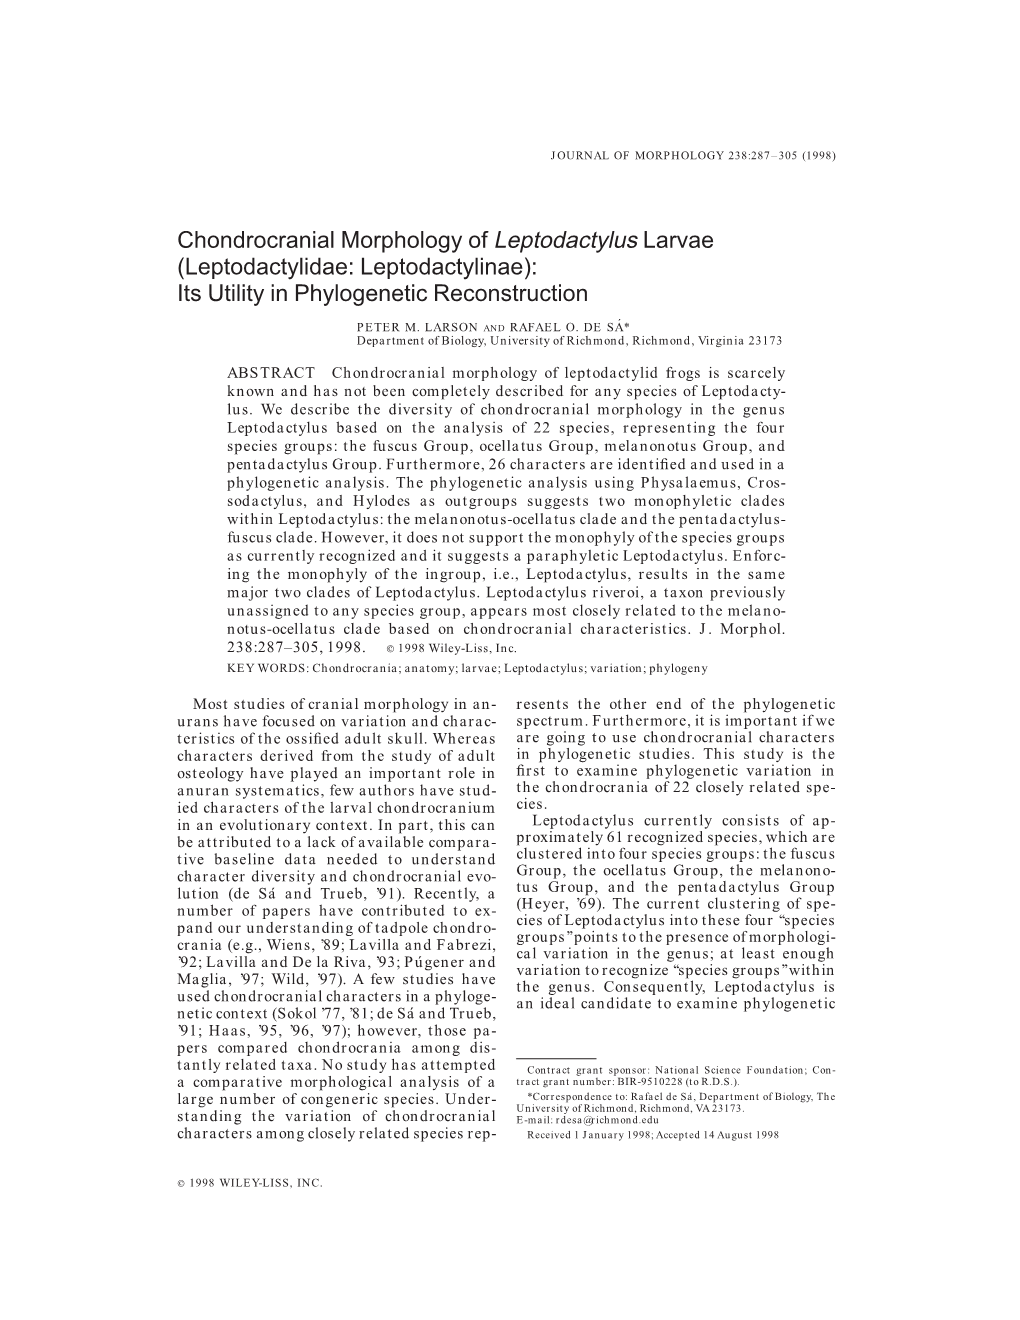 Chondrocranial Morphology of Leptodactylus Larvae (Leptodactylidae: Leptodactylinae): Its Utility in Phylogenetic Reconstruction